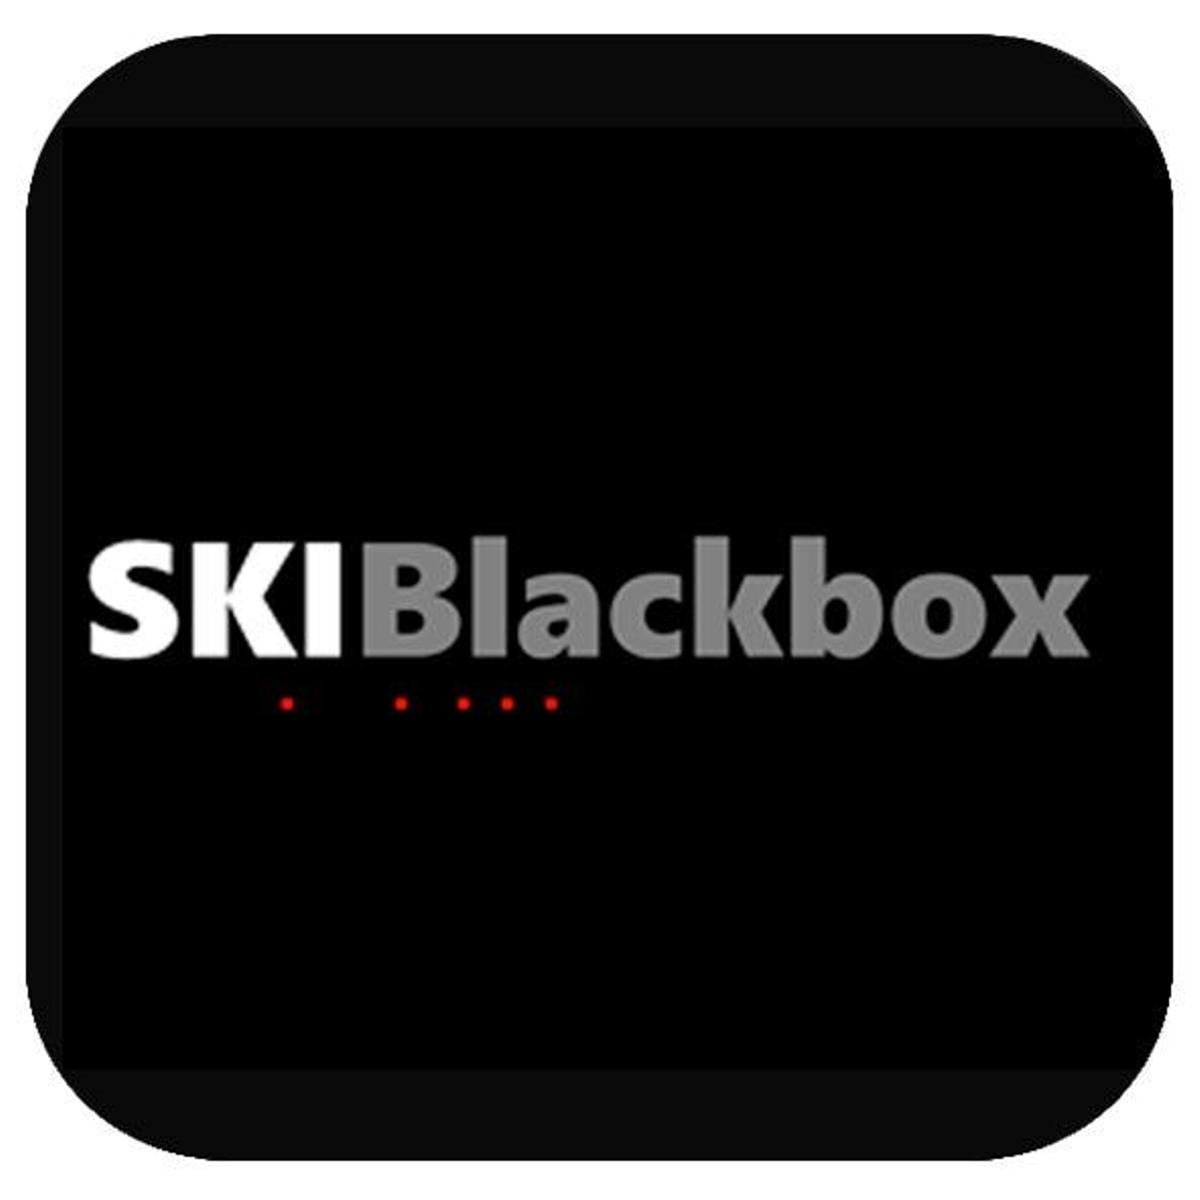 Ski Blackbox